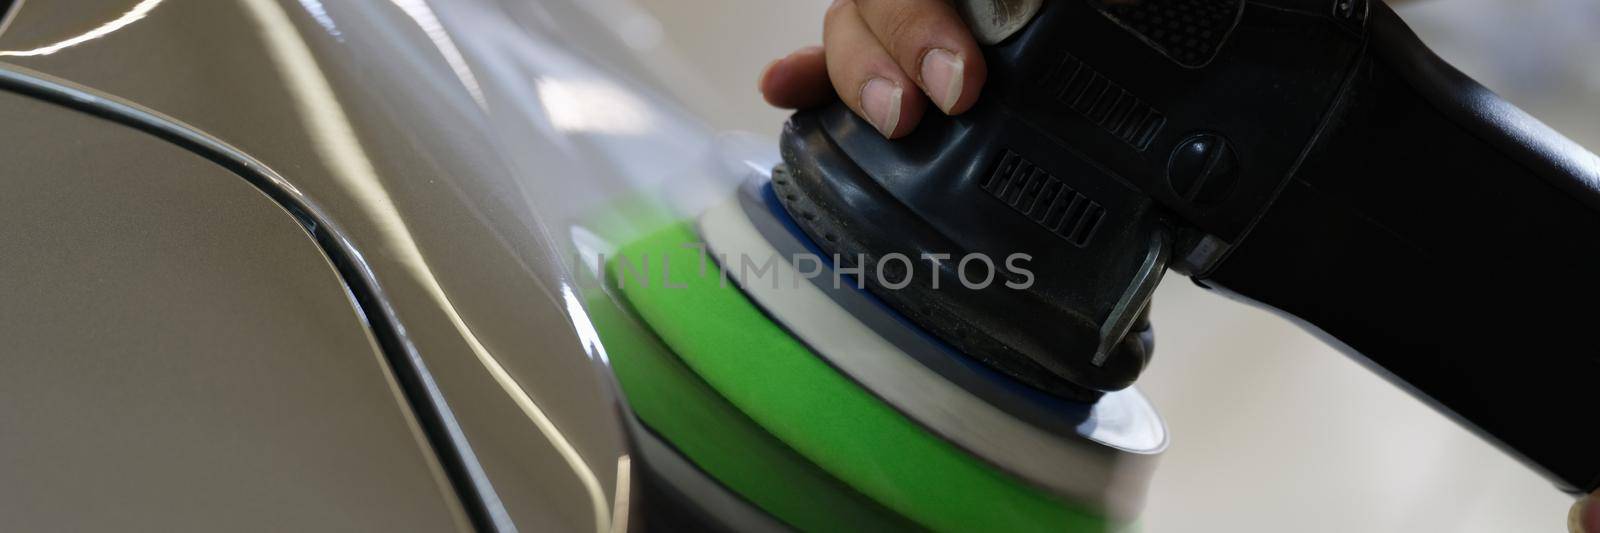 Mechanic polishing headlights of car using special machine closeup by kuprevich